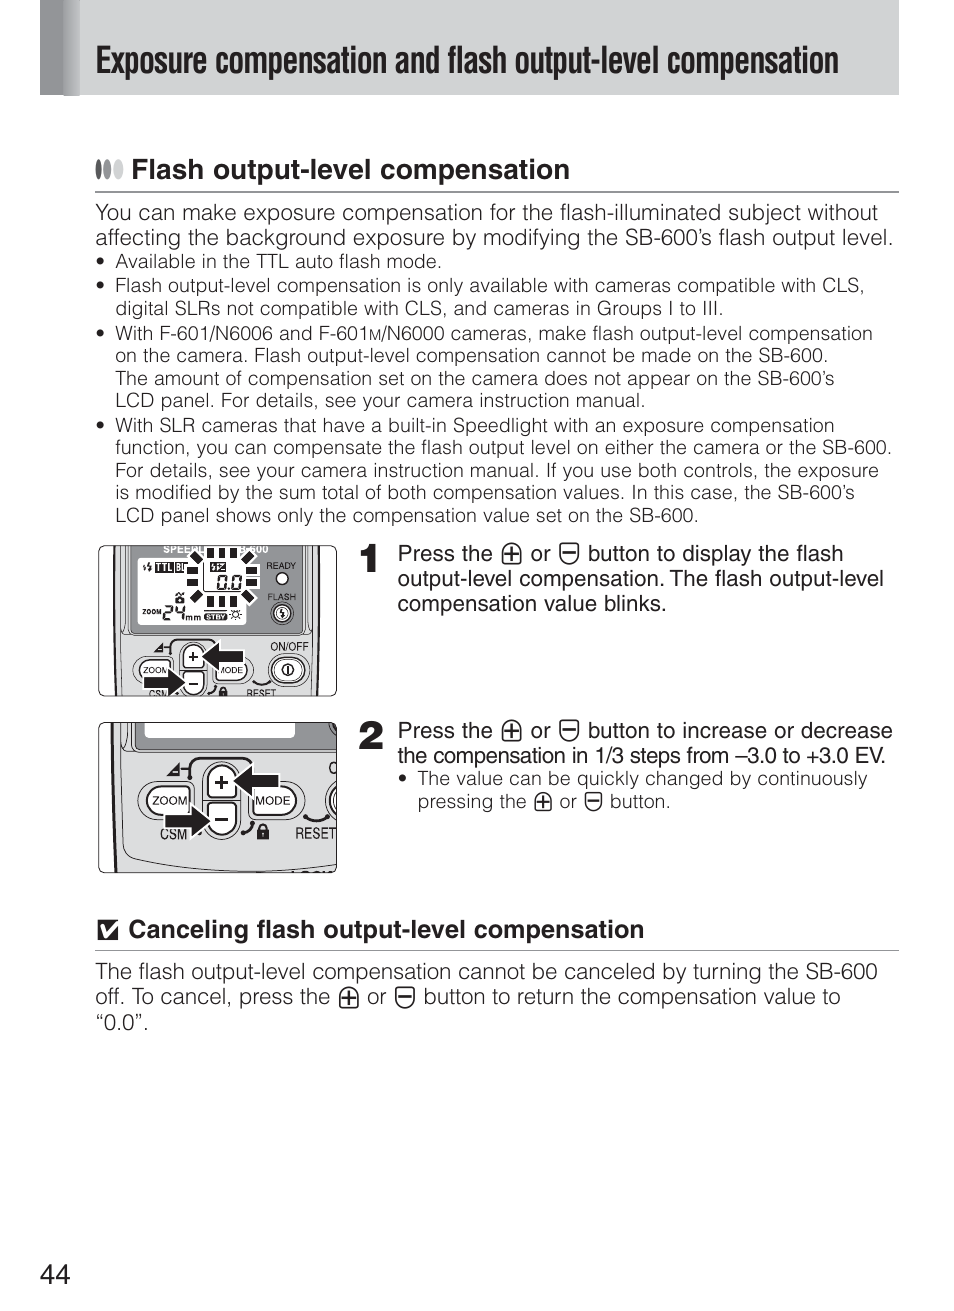 Flash output-level compensation | Nikon Speedlight SB-600 User Manual | Page 44 / 92